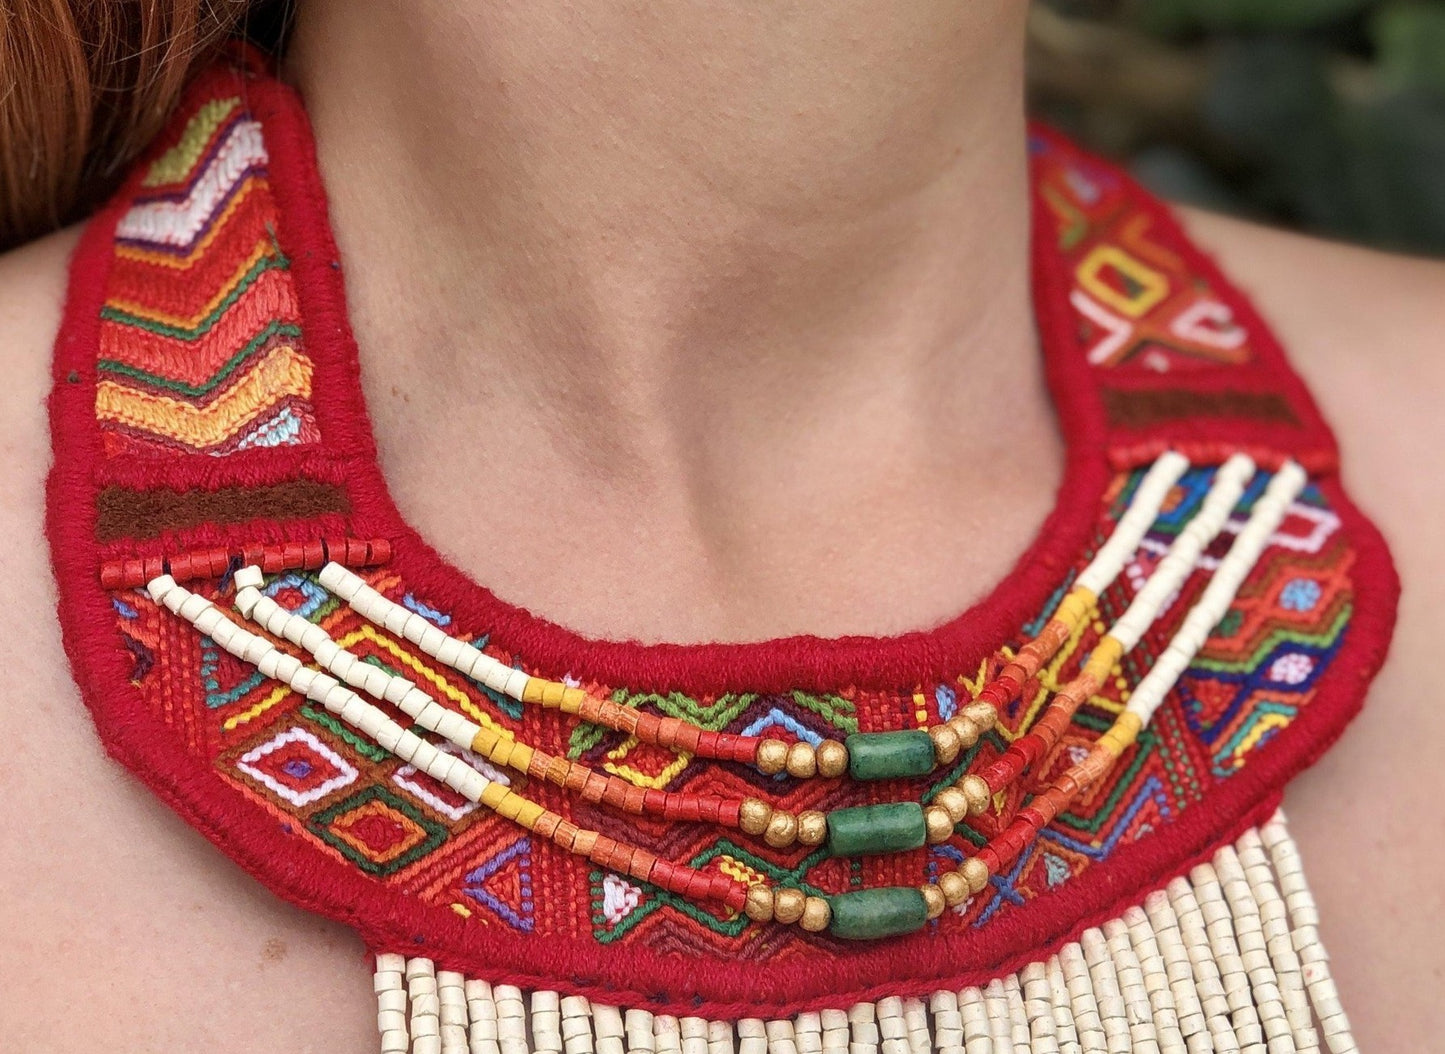 Ceremonial Textile Necklaces with Precious Stones - "Semuc Champey"